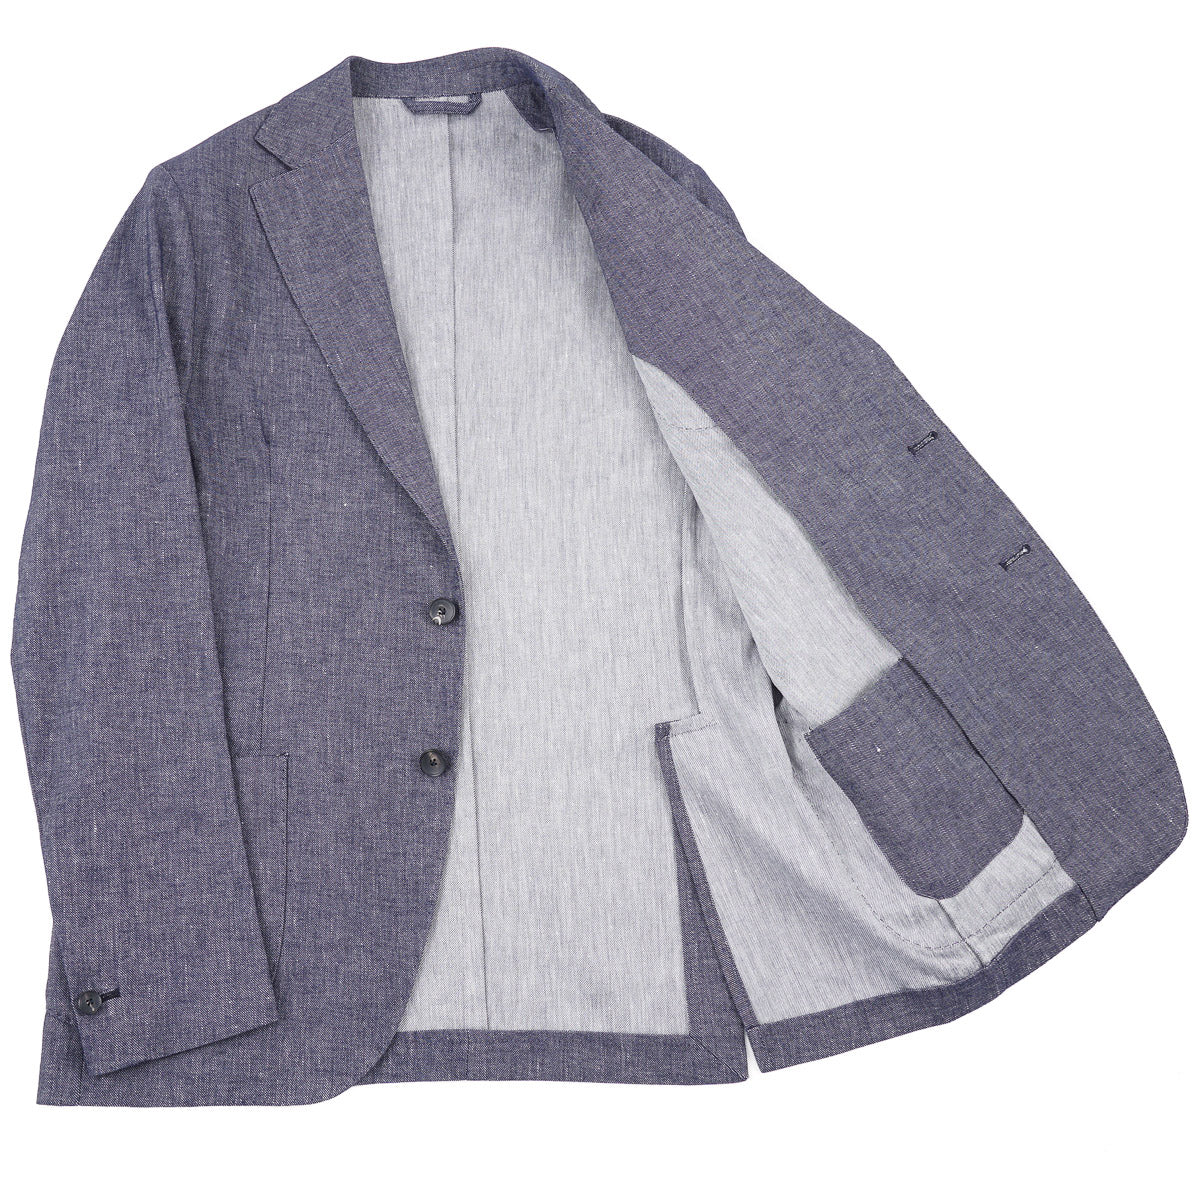 Luigi Borrelli Unlined Linen-Cotton Suit - Top Shelf Apparel